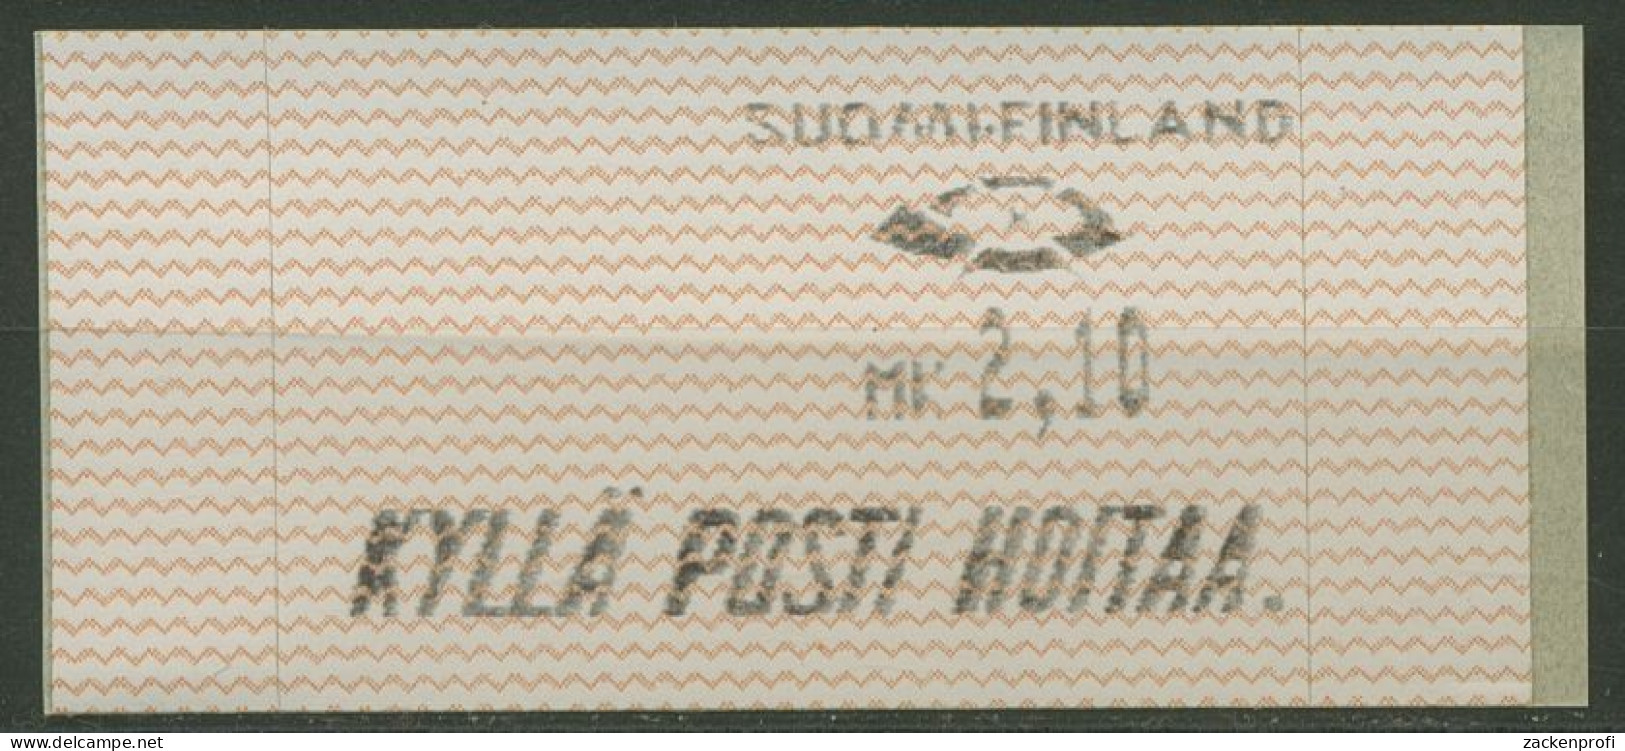 Finnland Automatenmarken 1991 Wellenlinien Einzelwert ATM 10.1 Z 1 Postfrisch - Timbres De Distributeurs [ATM]